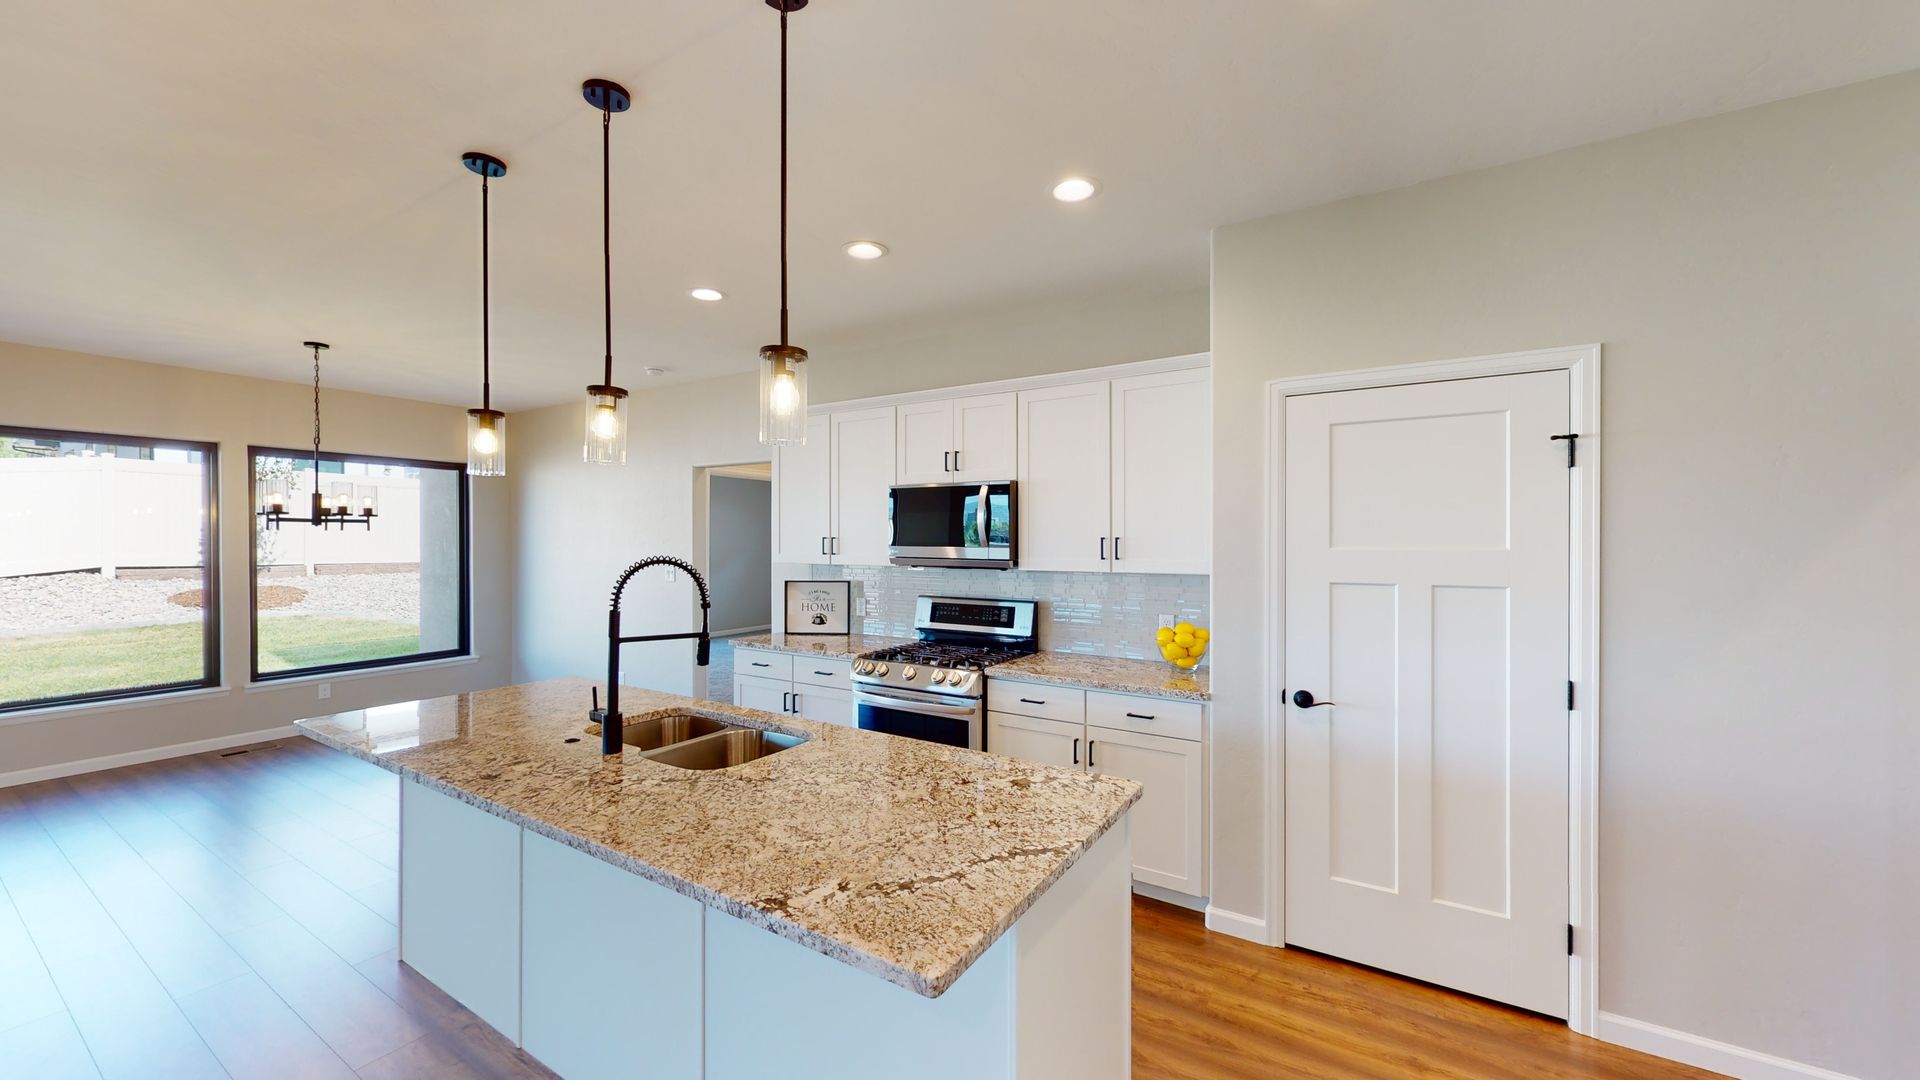 Sleek kitchen design featuring granite counters and hardwood floors